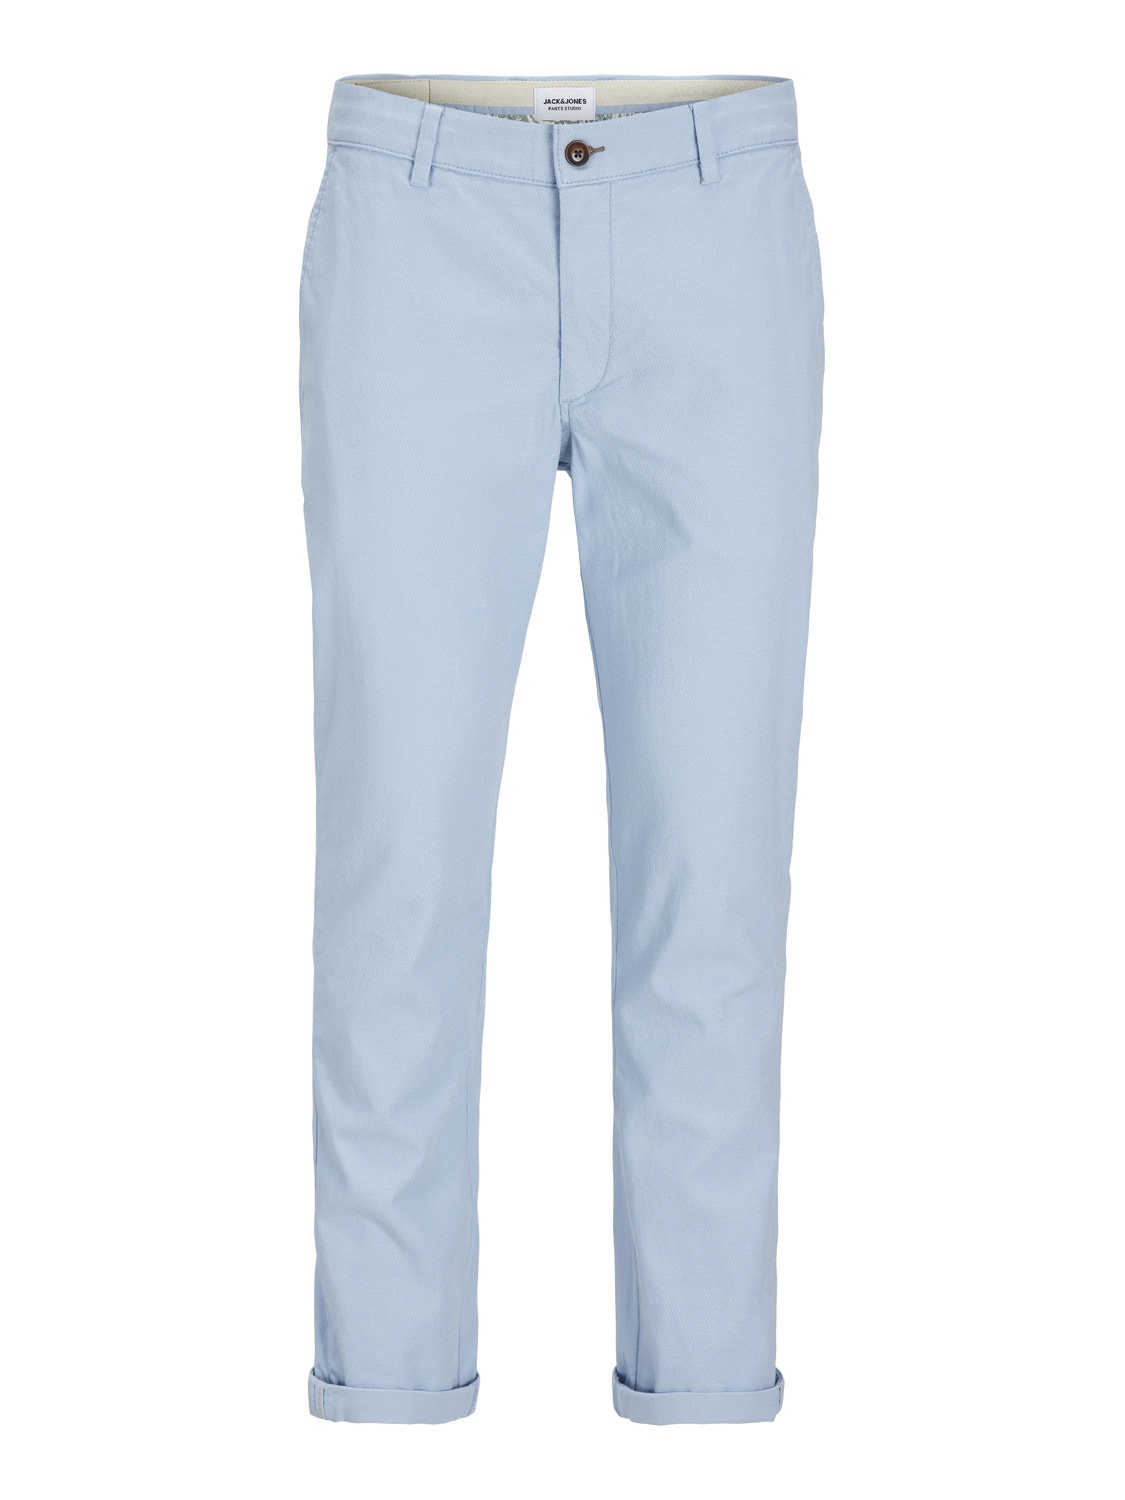 Jack & Jones Slim Fit Chino trousers -Mountain Spring - 12206198